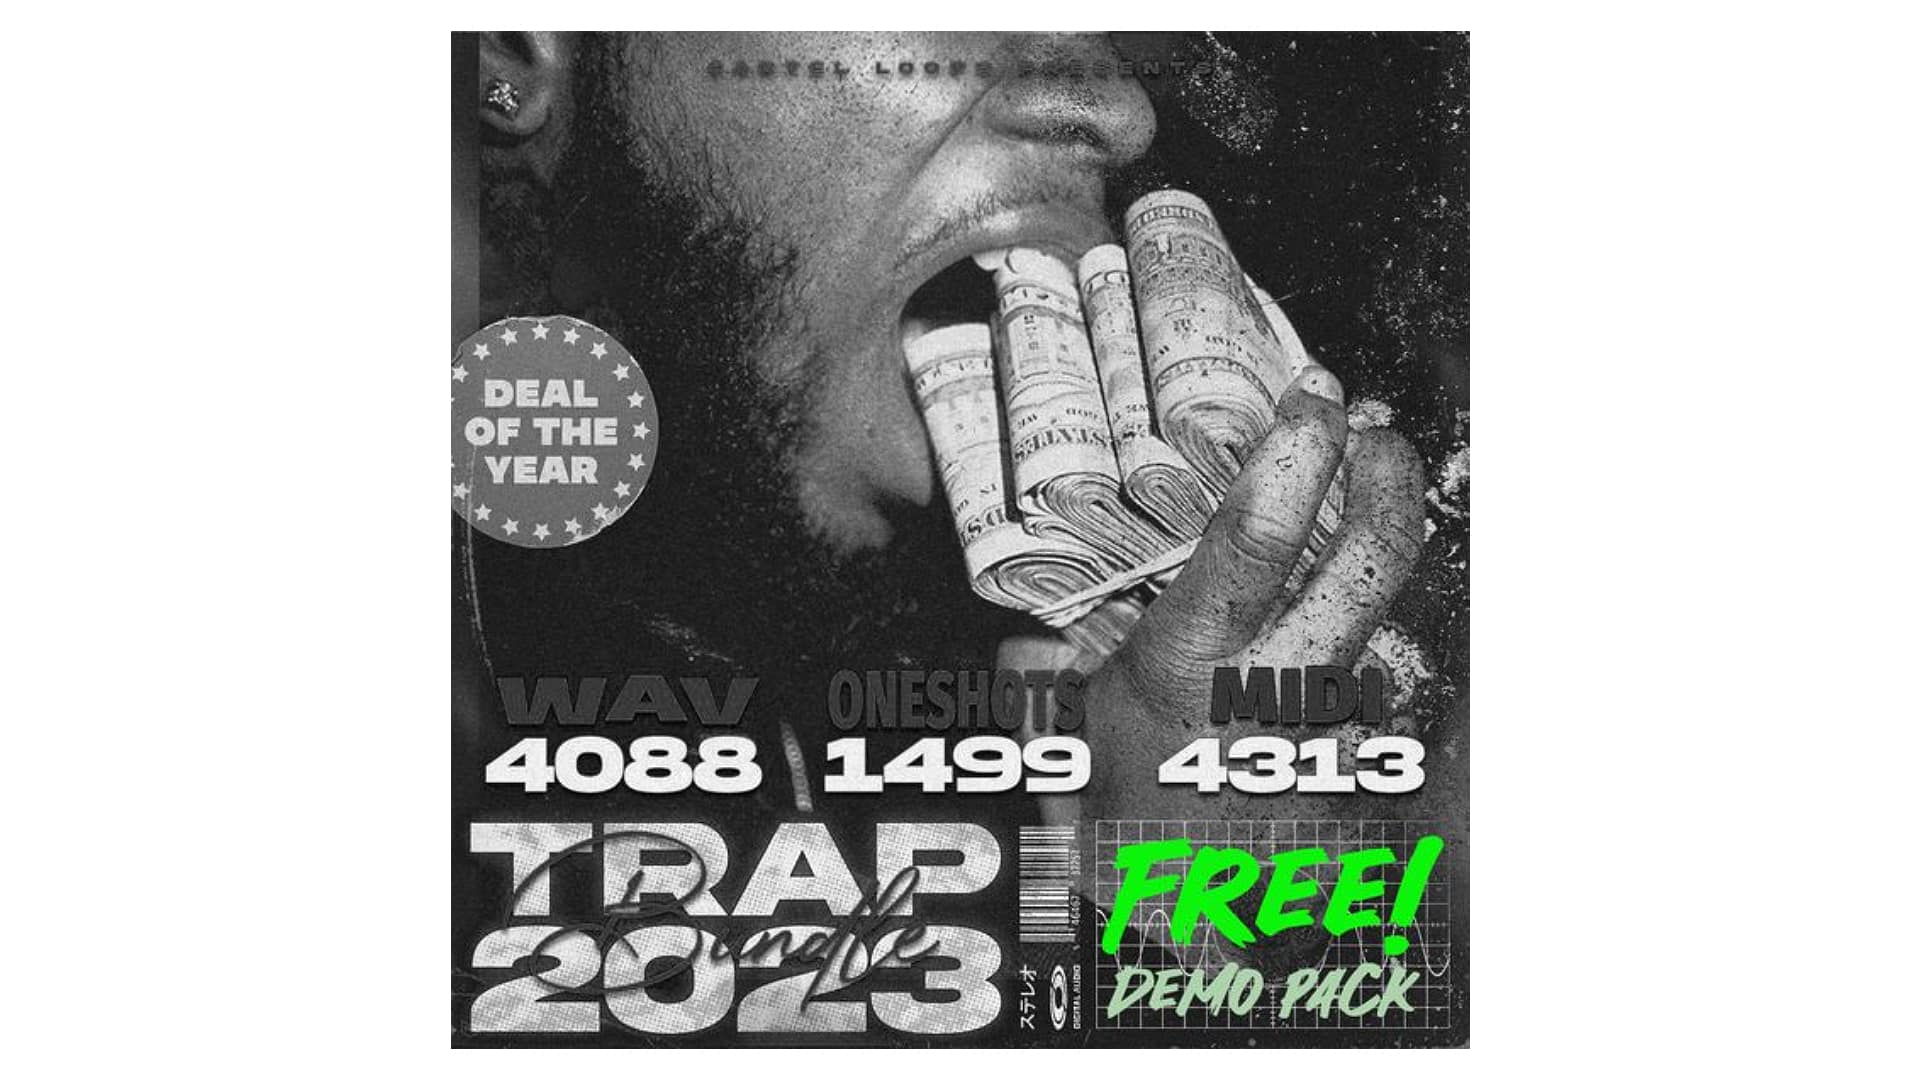 Free Trap Samples